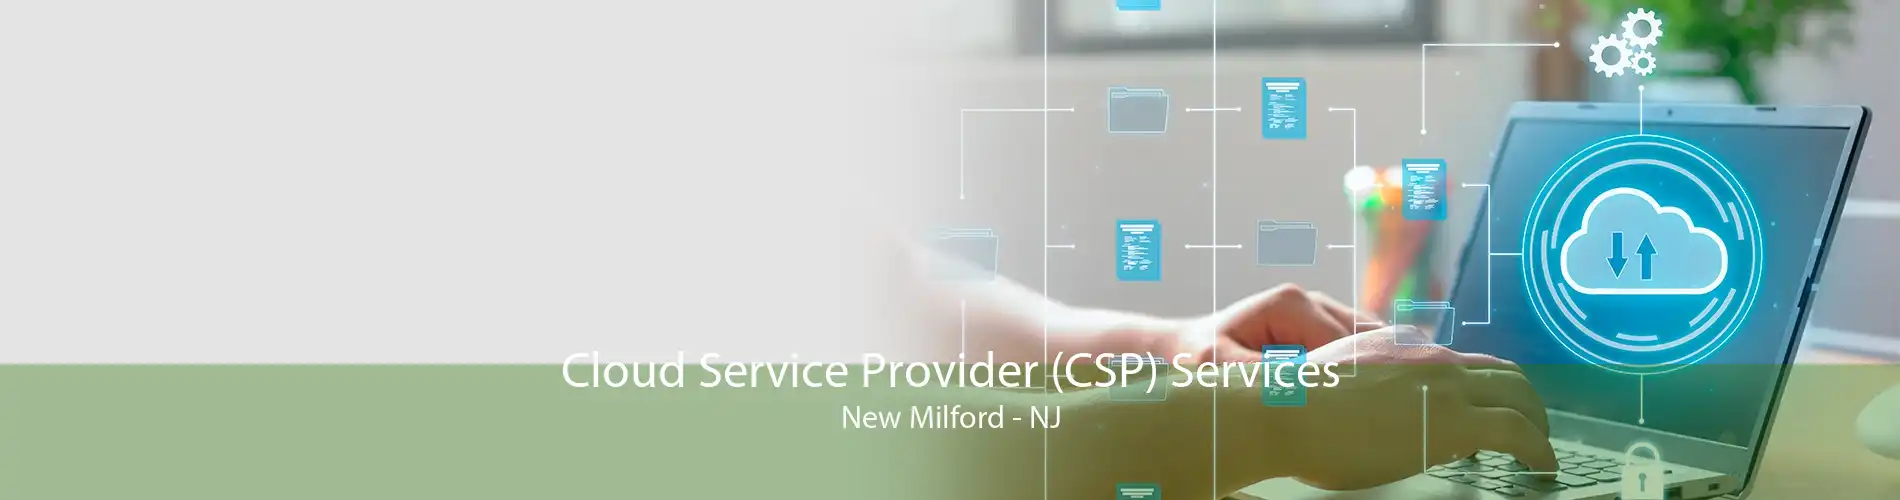 Cloud Service Provider (CSP) Services New Milford - NJ